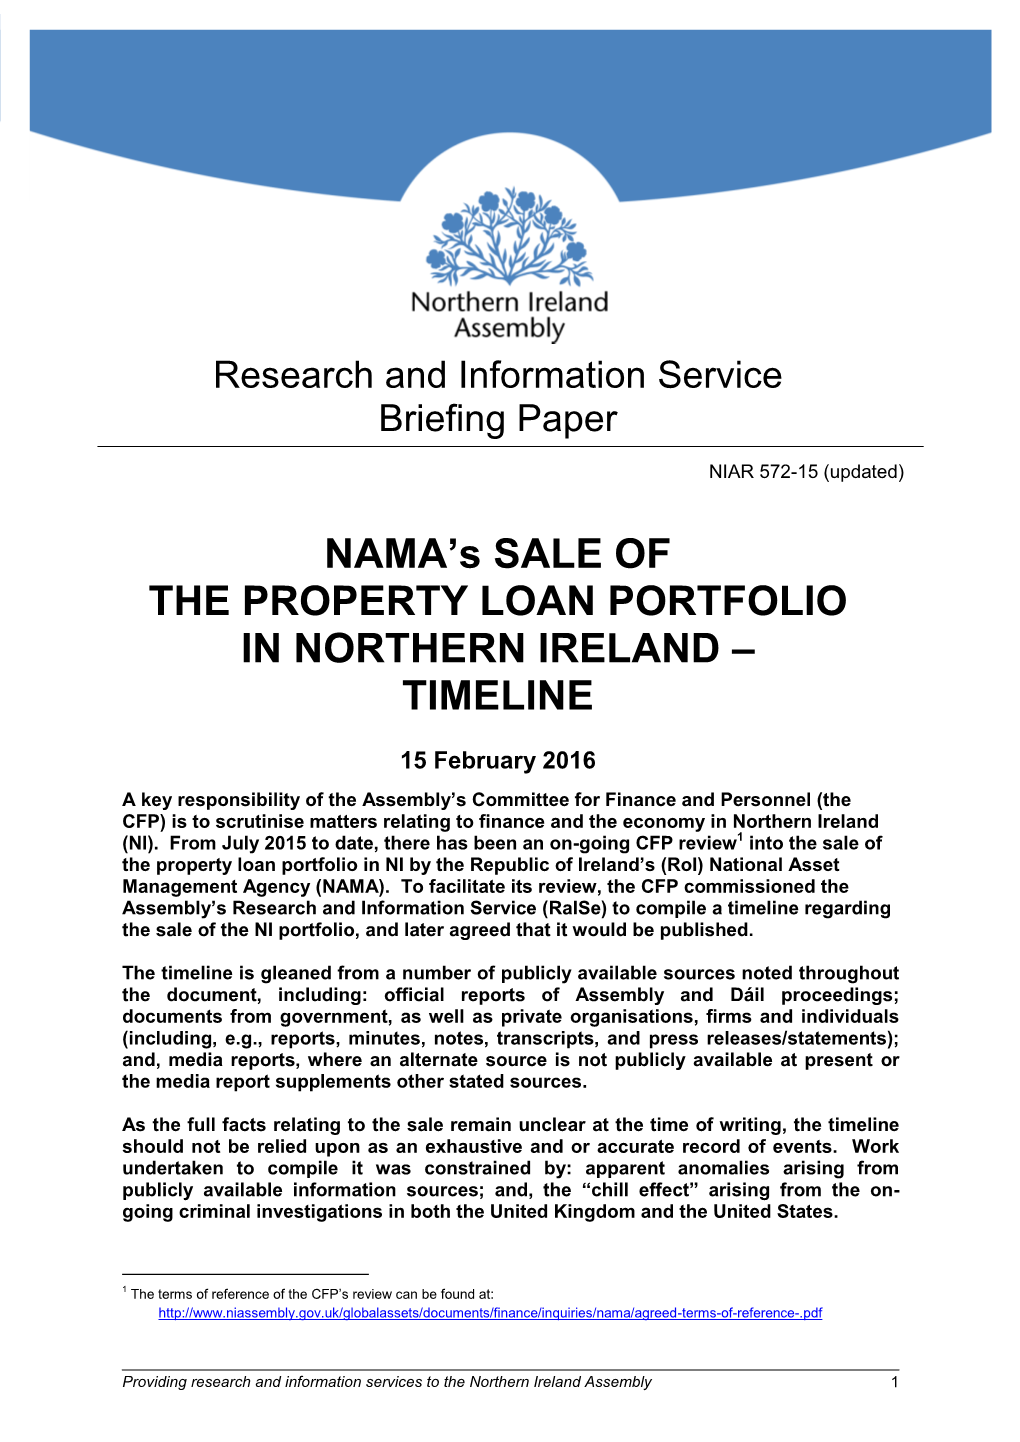 NAMA's Sale of the Property Loan Portfolio in Northern Ireland